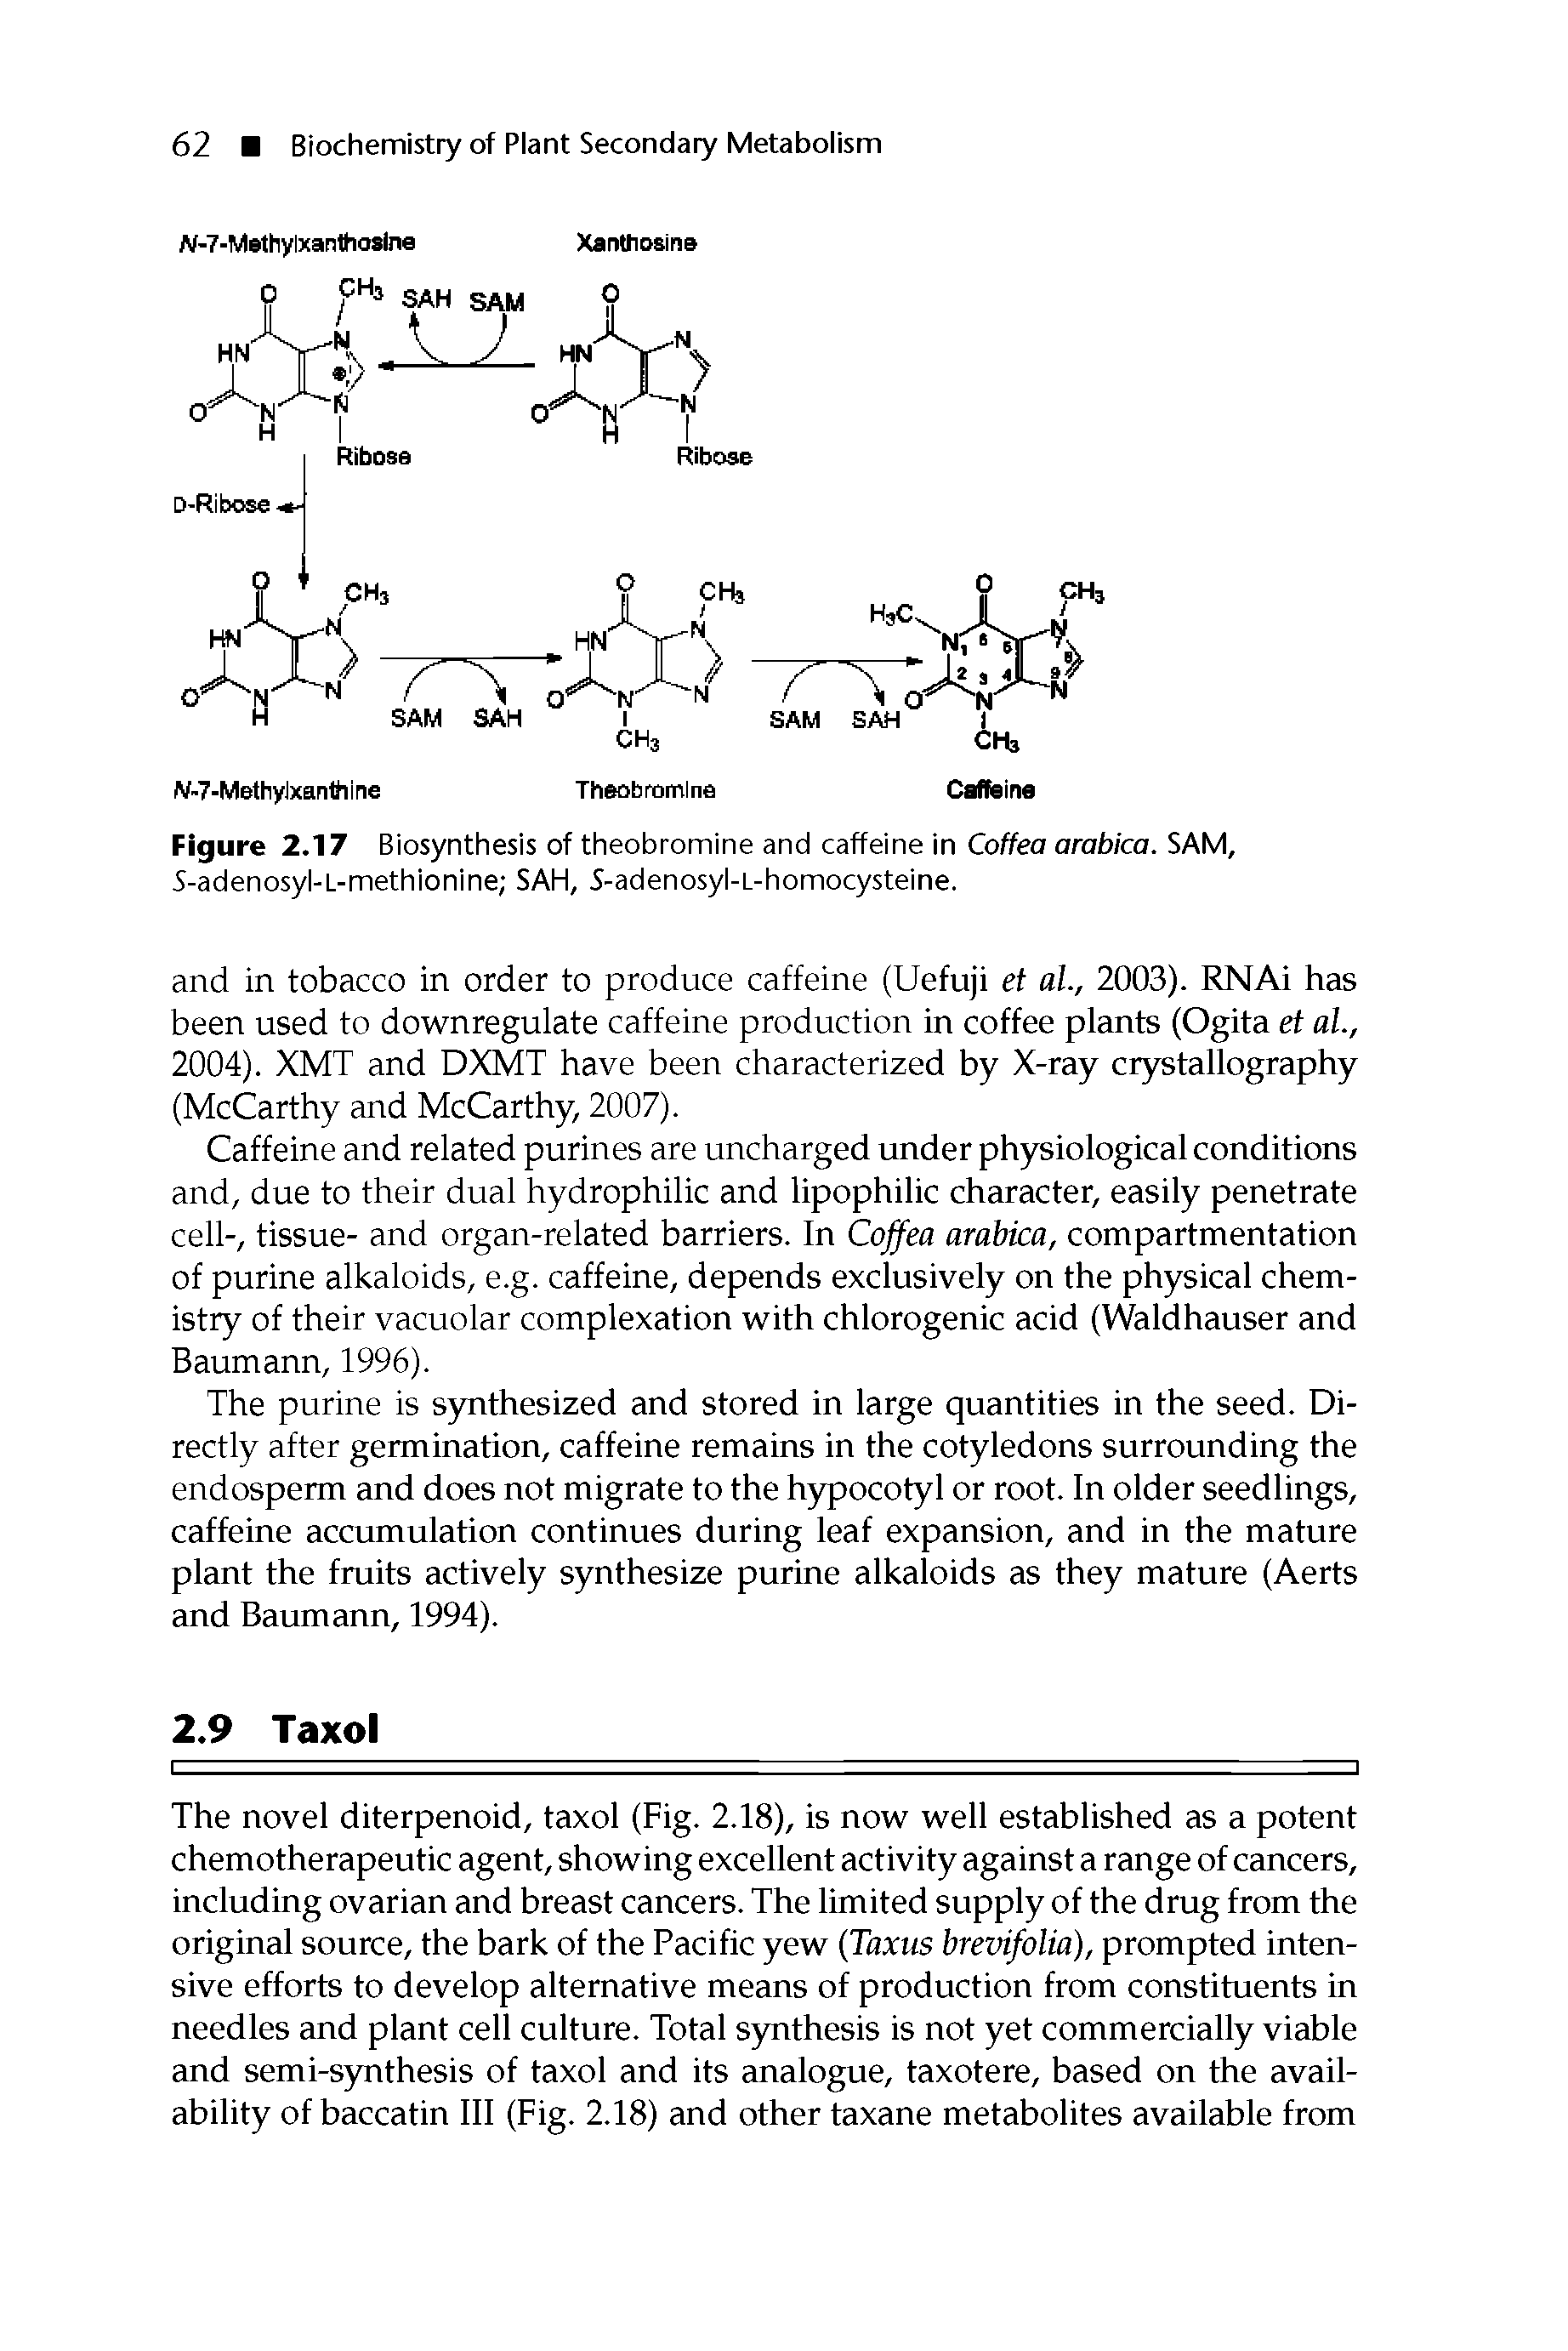 Figure 2.17 Biosynthesis of theobromine and caffeine in Coffea arabica. SAM, 5-adenosyl-L-methionine SAH, 5-adenosyl-L-homocysteine.